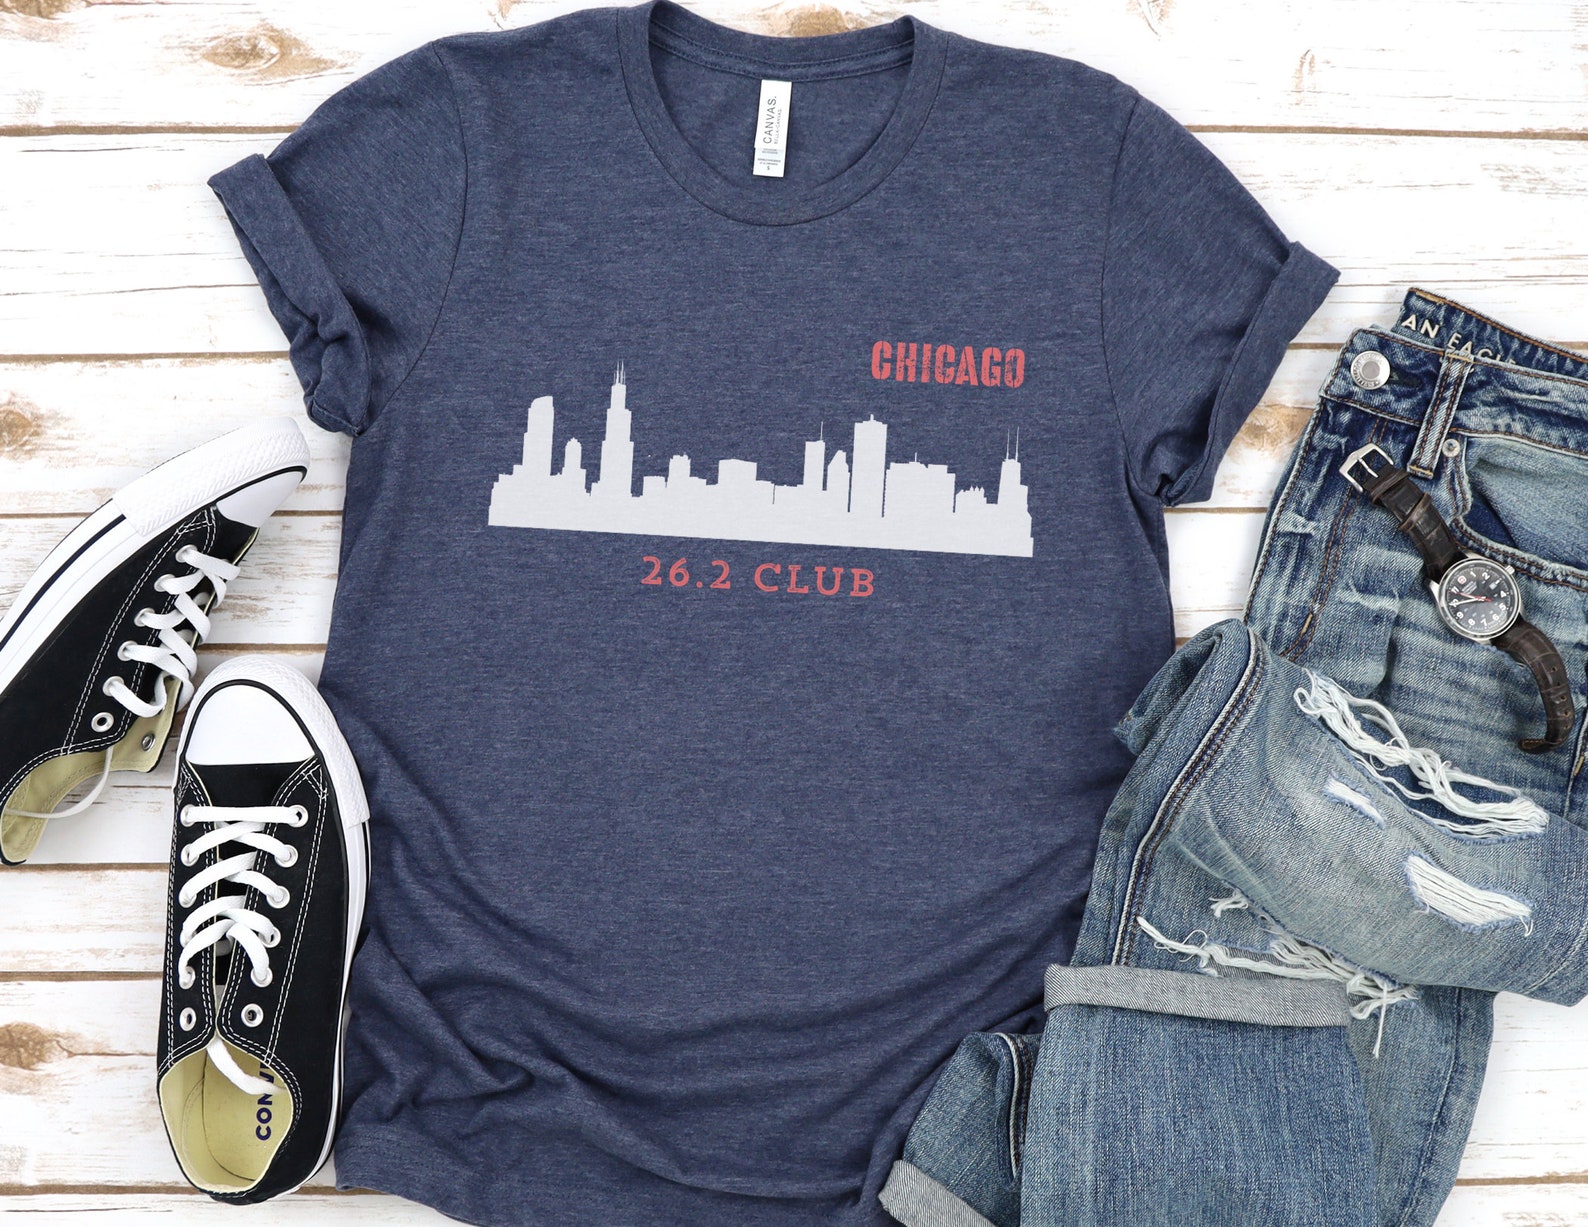 Chicago marathon shirt Chicago Marathon gift for runner 26.2 Etsy